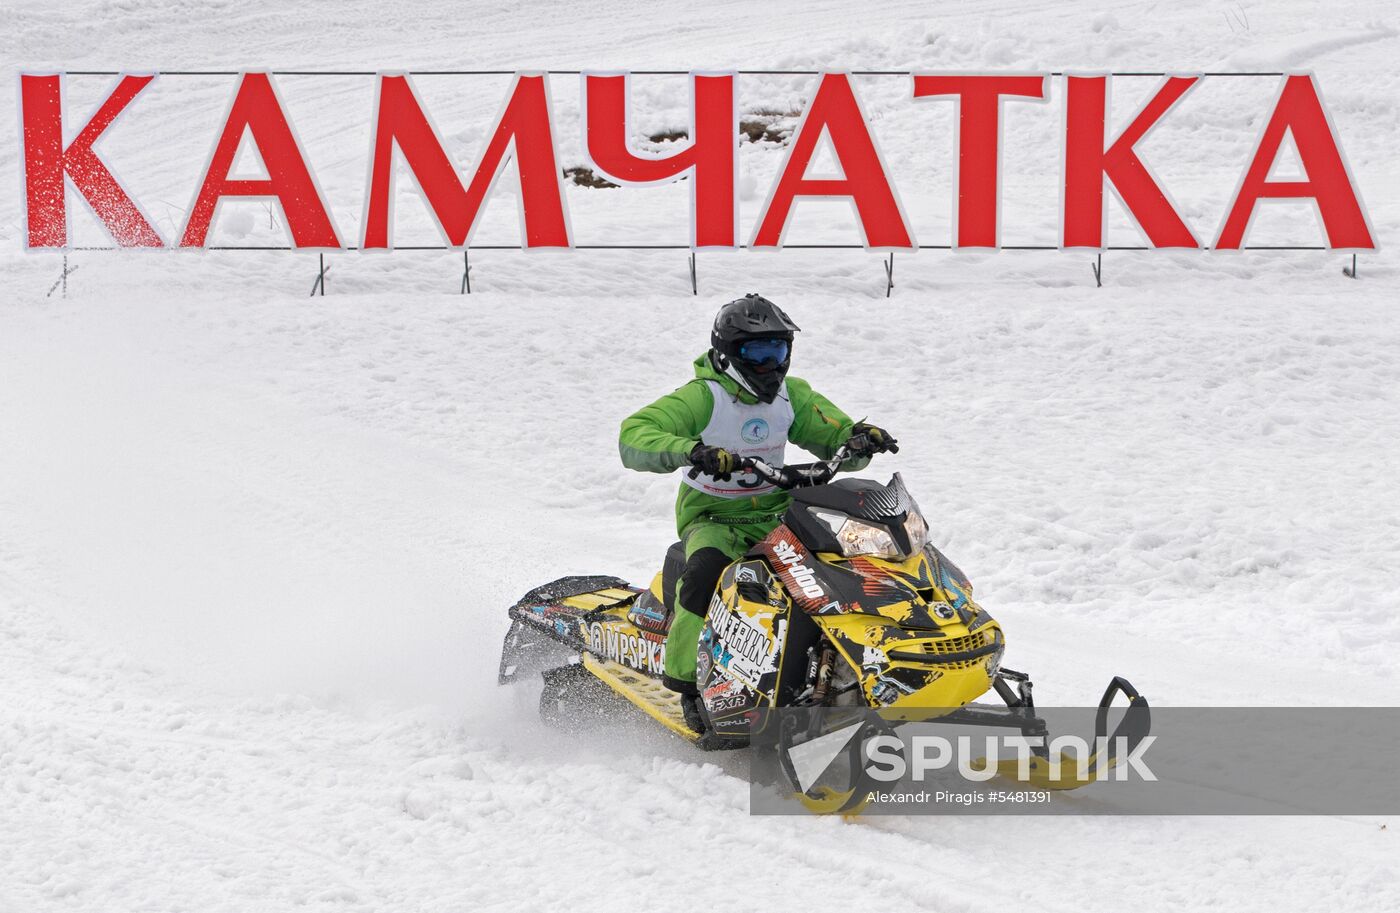 Kamchatka Territory Snocross Championship